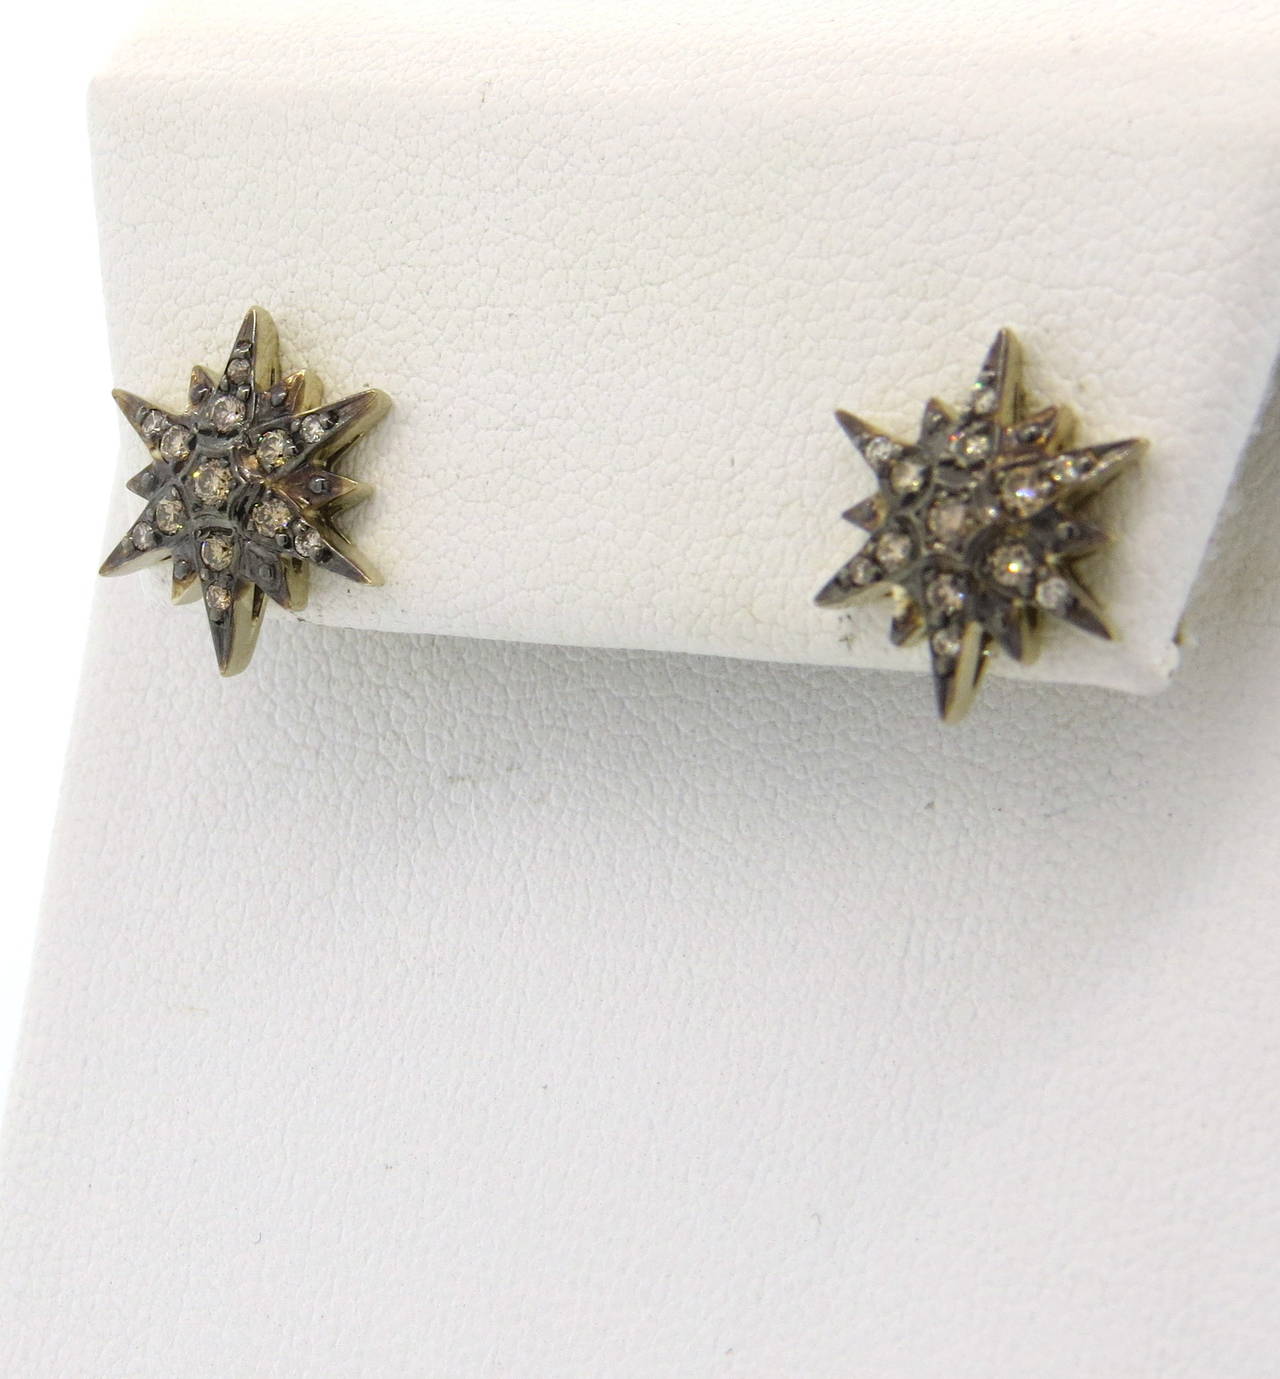 sterns diamond earrings